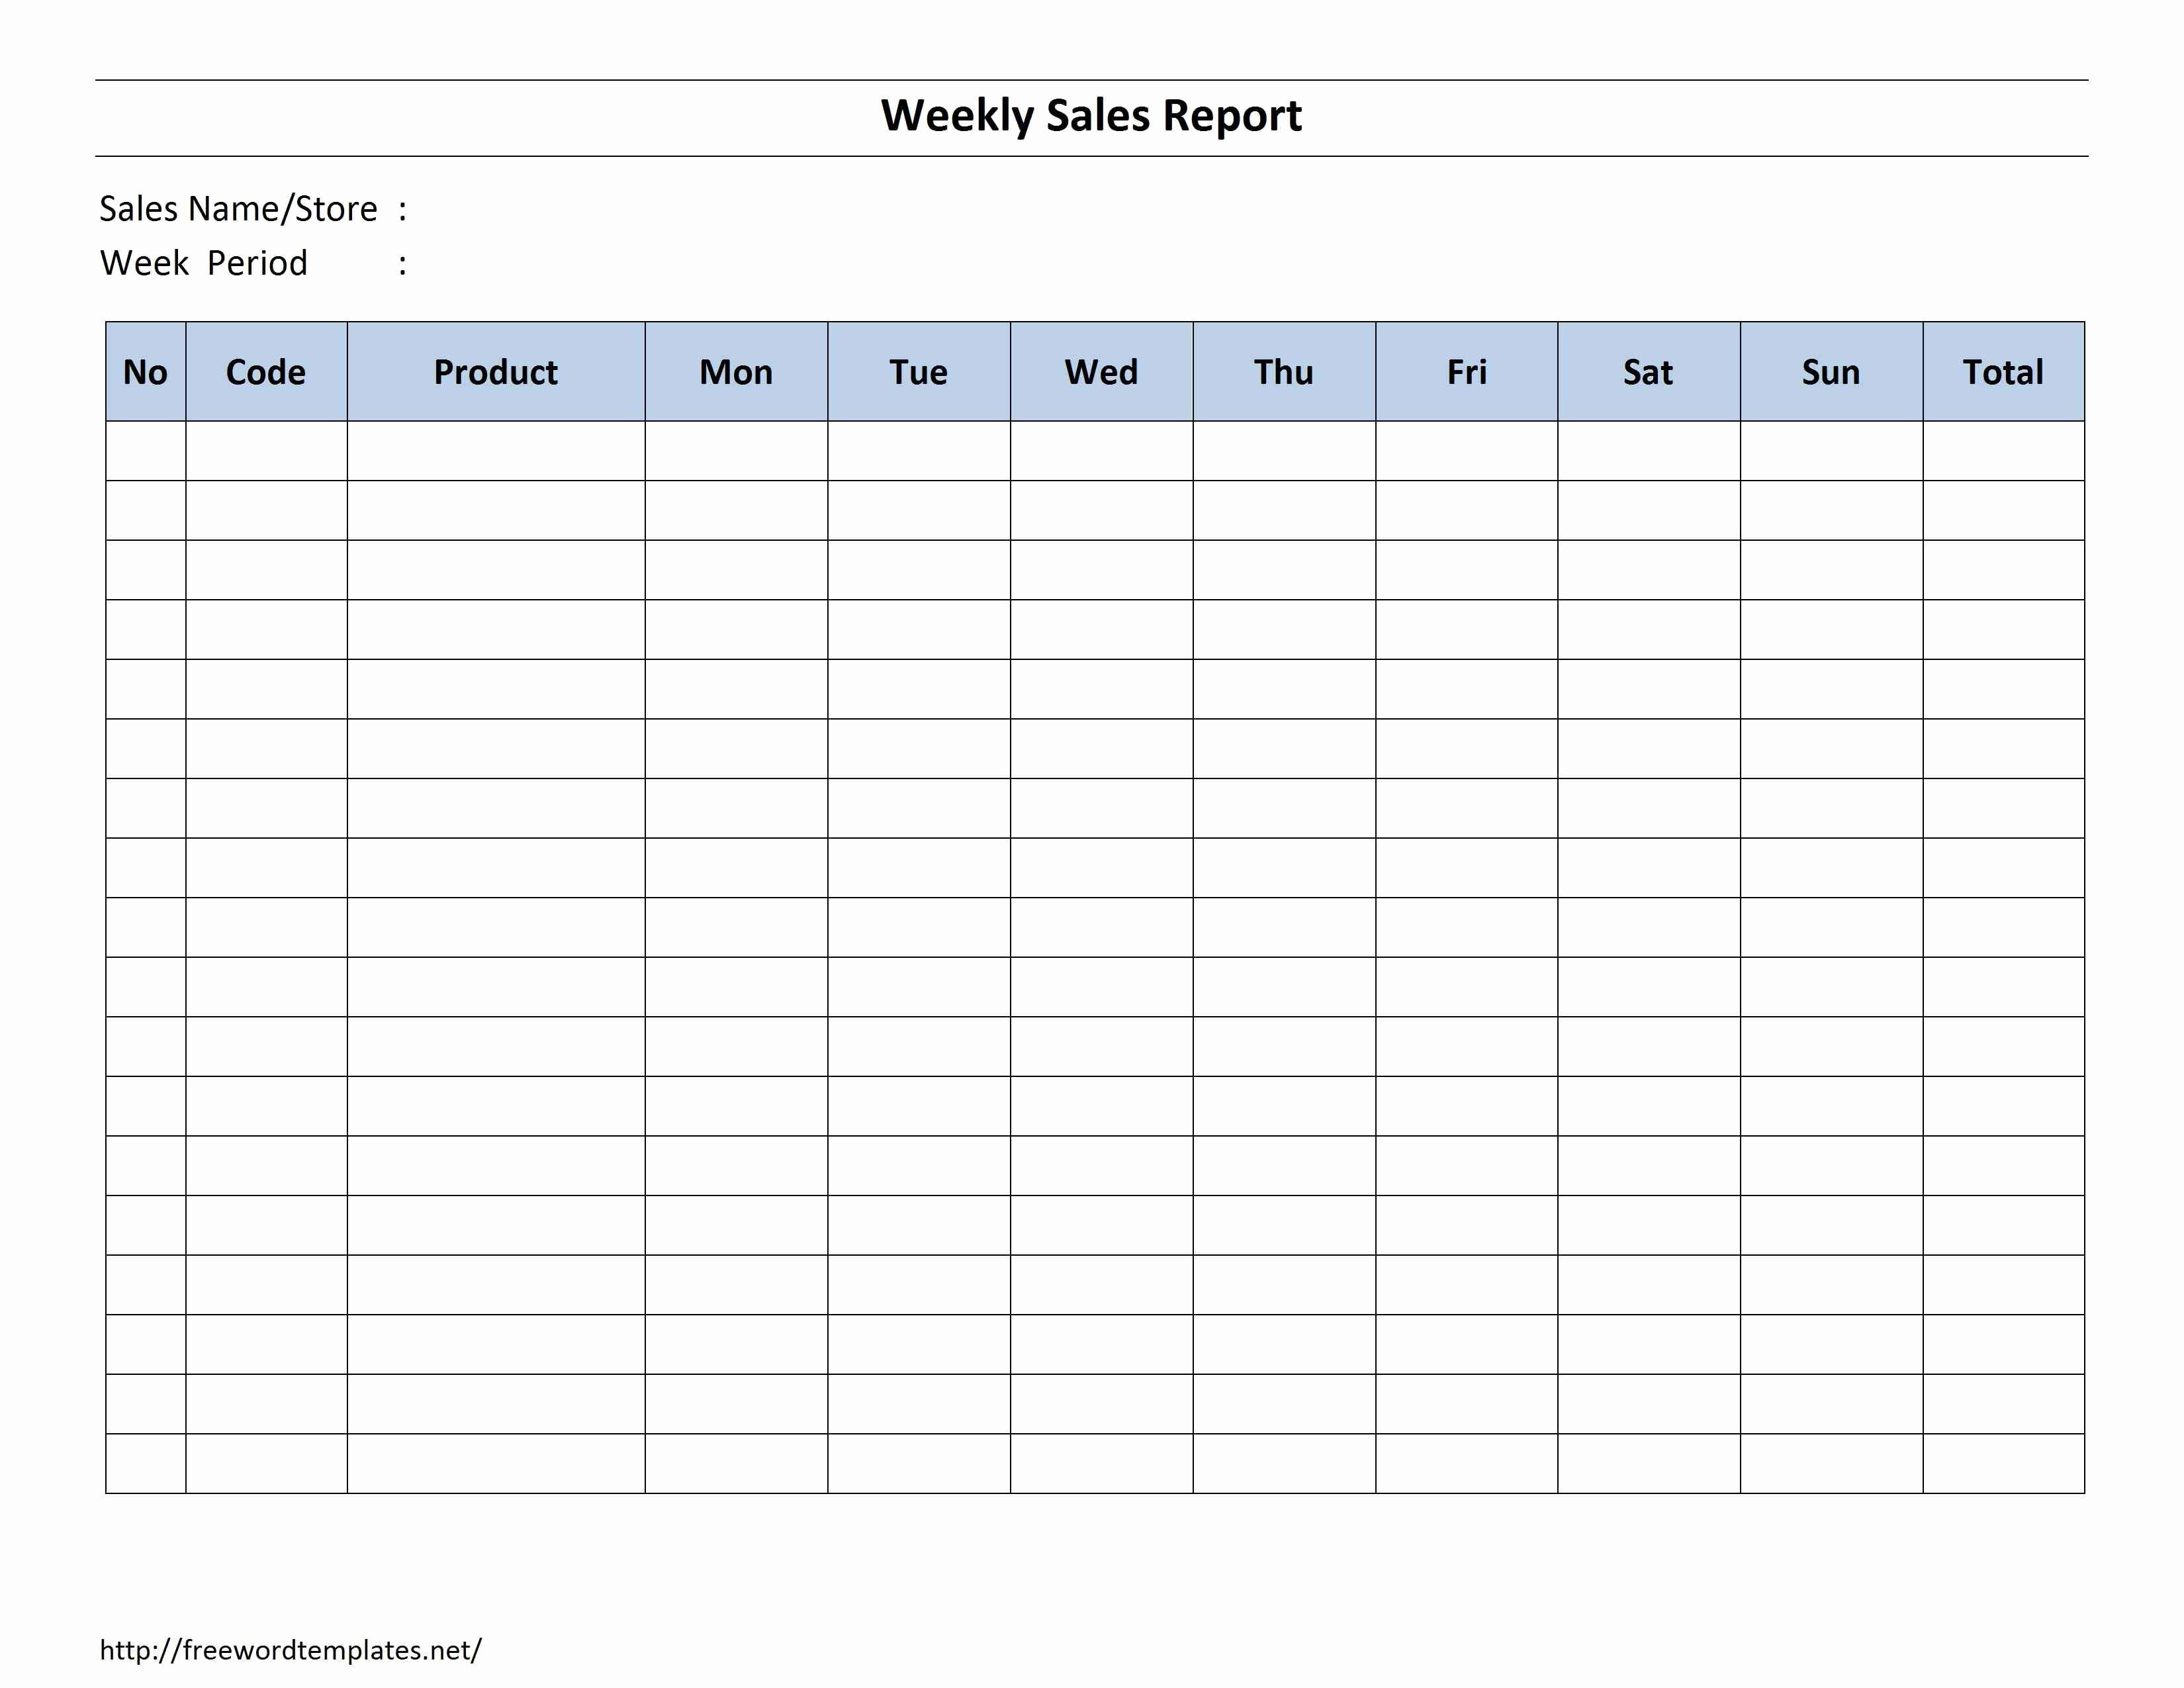 Quote Tracking Spreadsheet Elegant Tracking Sales Calls Spreadsheet For Sales Quote Tracking Spreadsheet